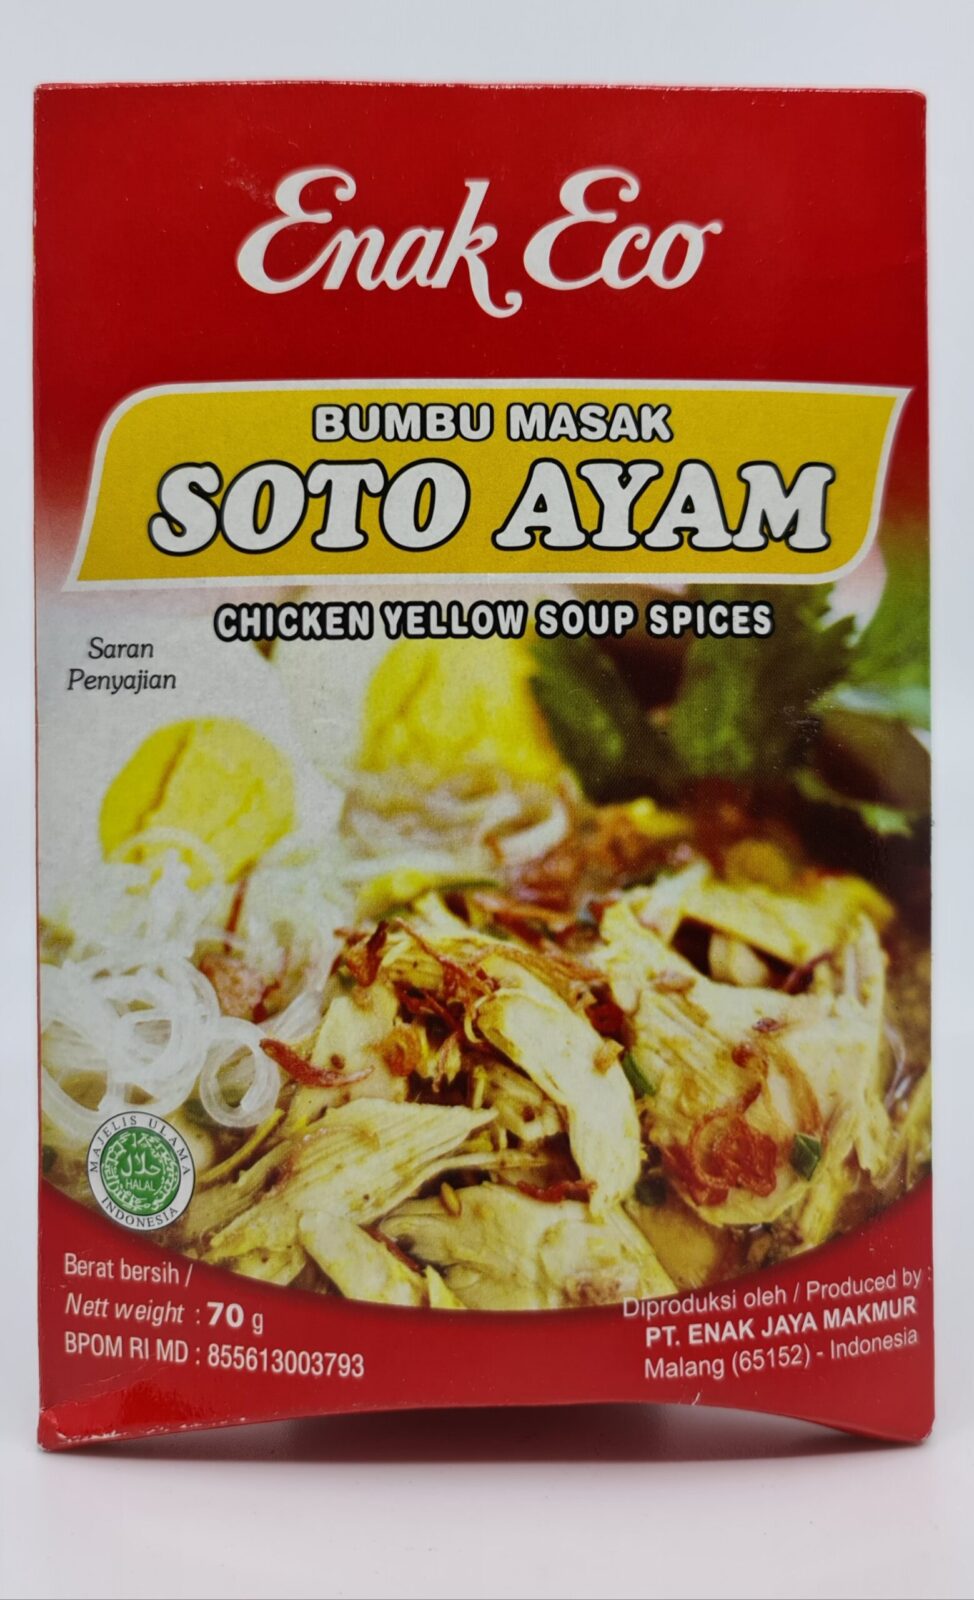 Enak Eco Soto Ayam Chicken Yellow Soup Spices - Toko Indonesia